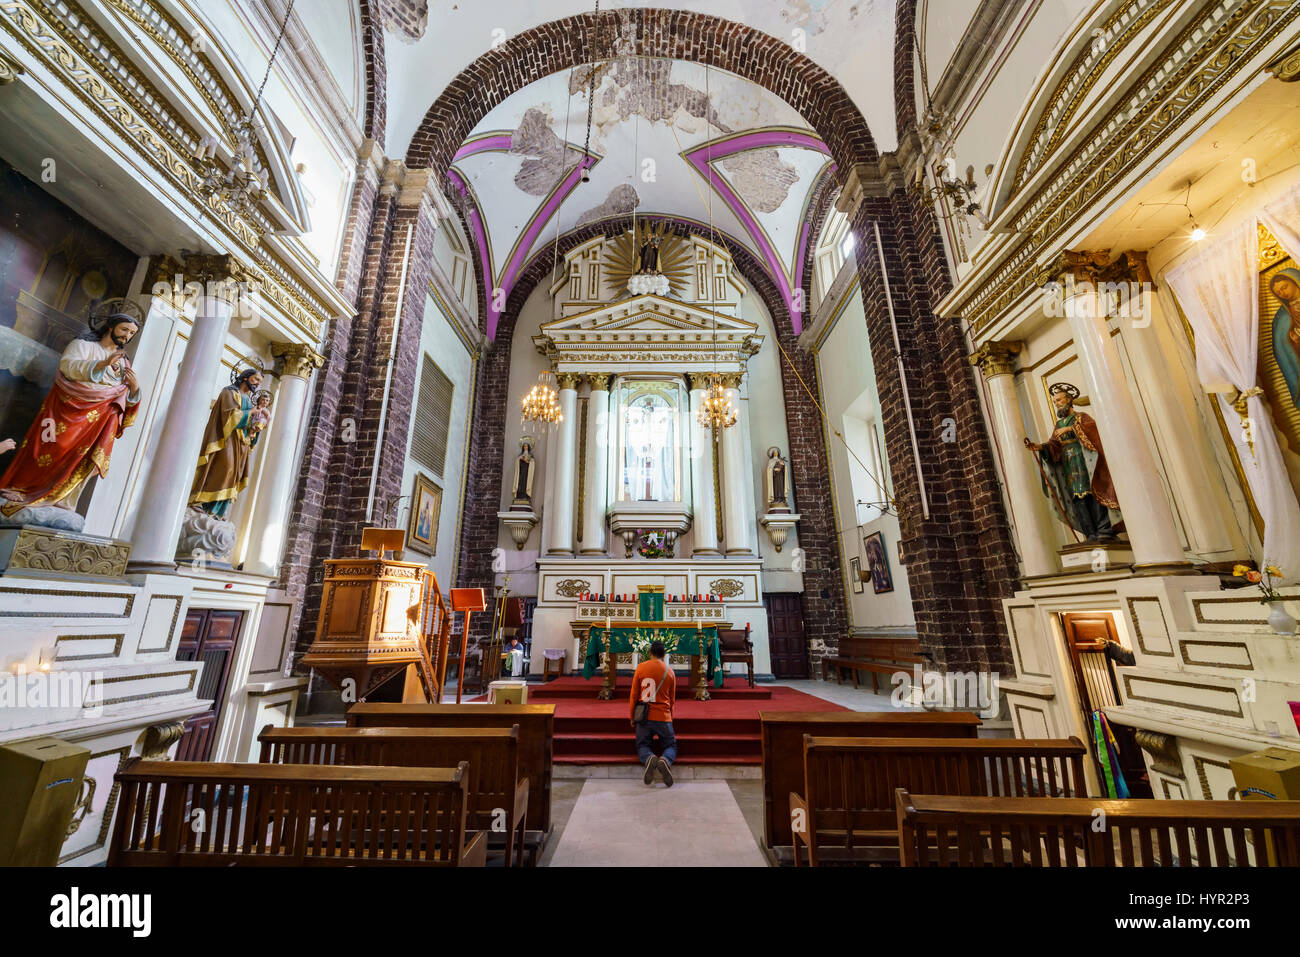 Mexico City, FEB 17: The historical church - Iglesia De La Salud on FEB 17, 2017 at Mexico City Stock Photo